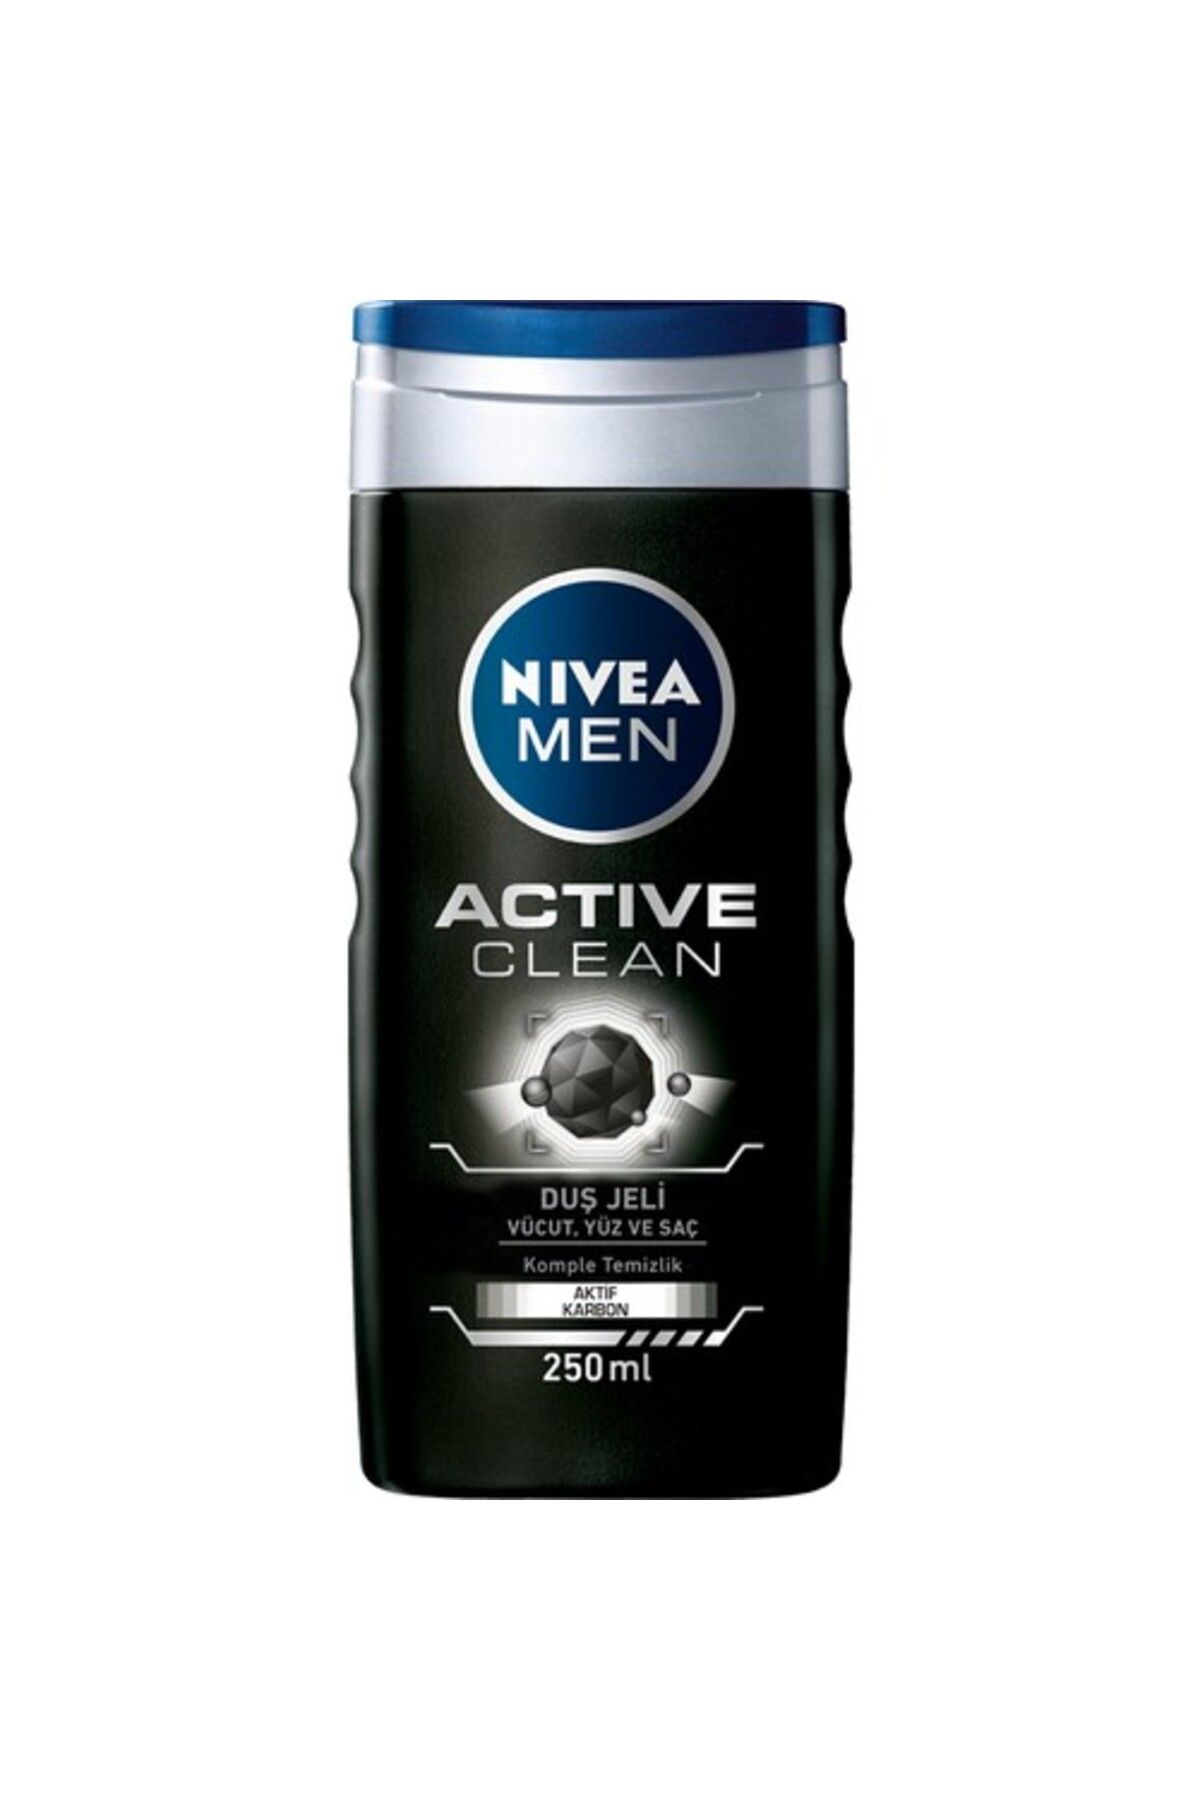 NIVEA ژل حمام تمیز کننده فعال 250 میلی لیتر برای مردان